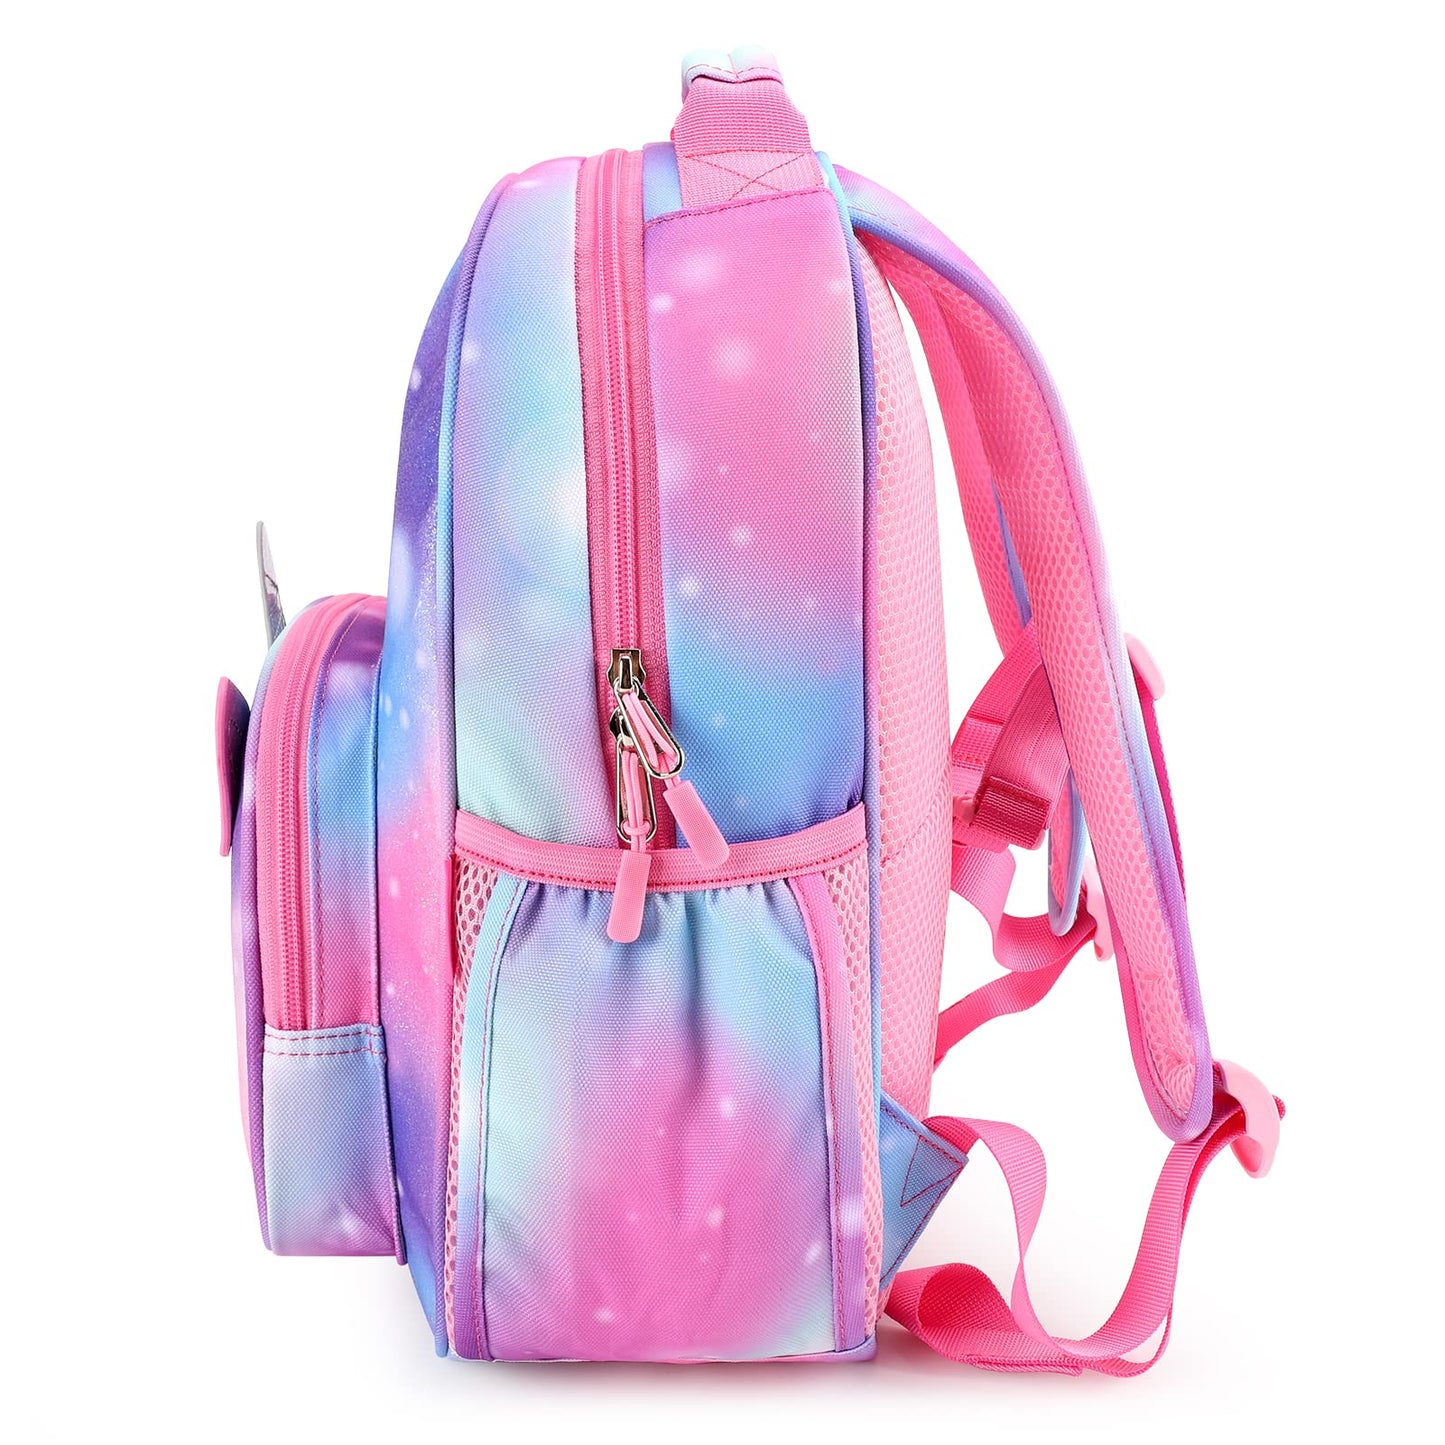 Colorful Unicorn schoolbag Mibasies 